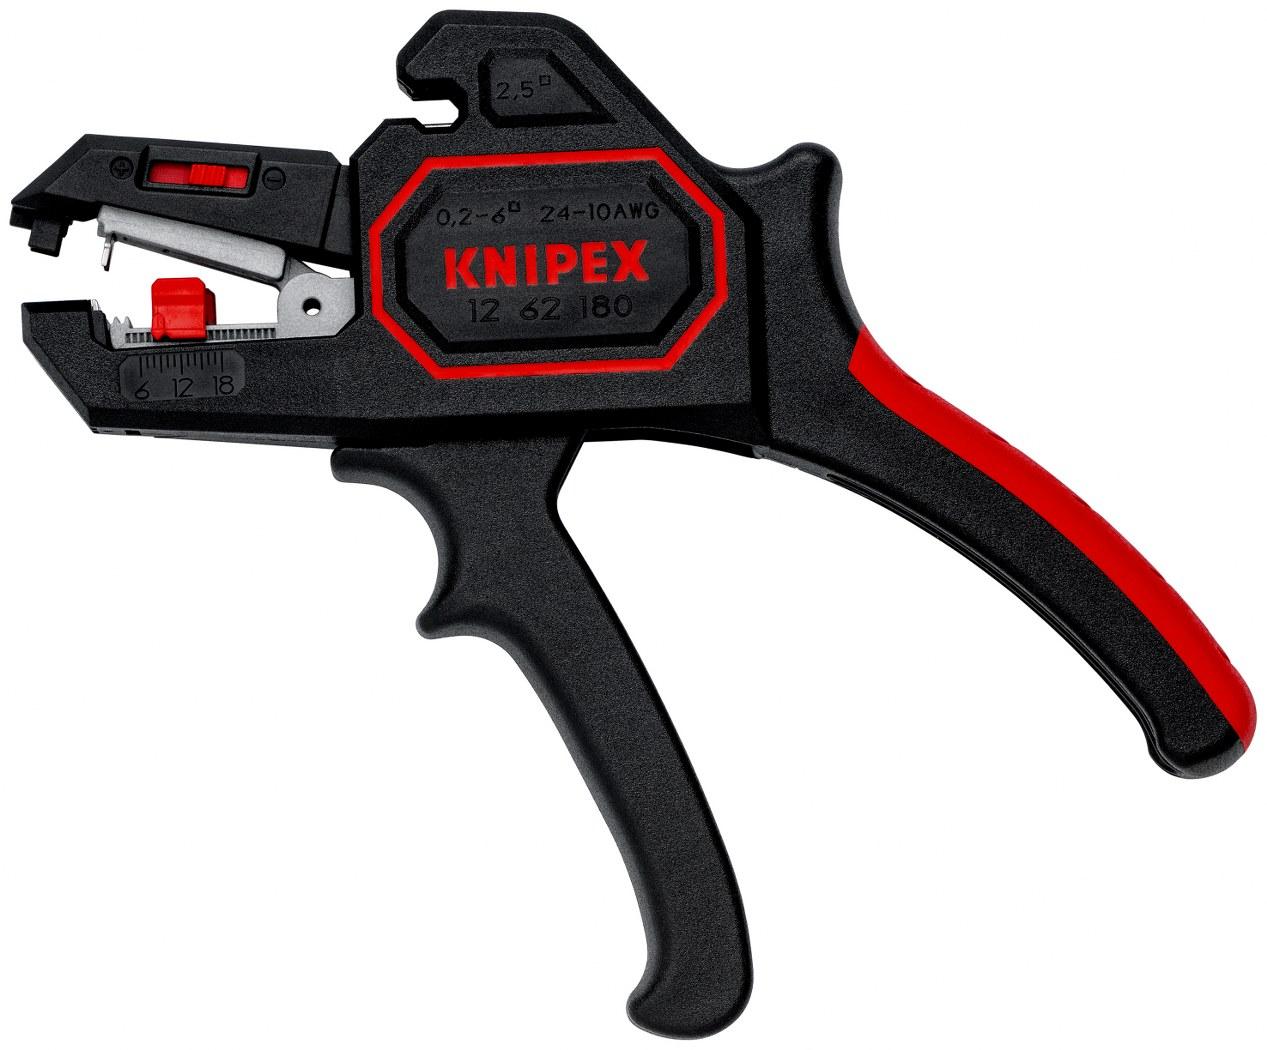 Selected image for KNIPEX Automatski striper 0.2 - 6 mm² 12 62 180 crni